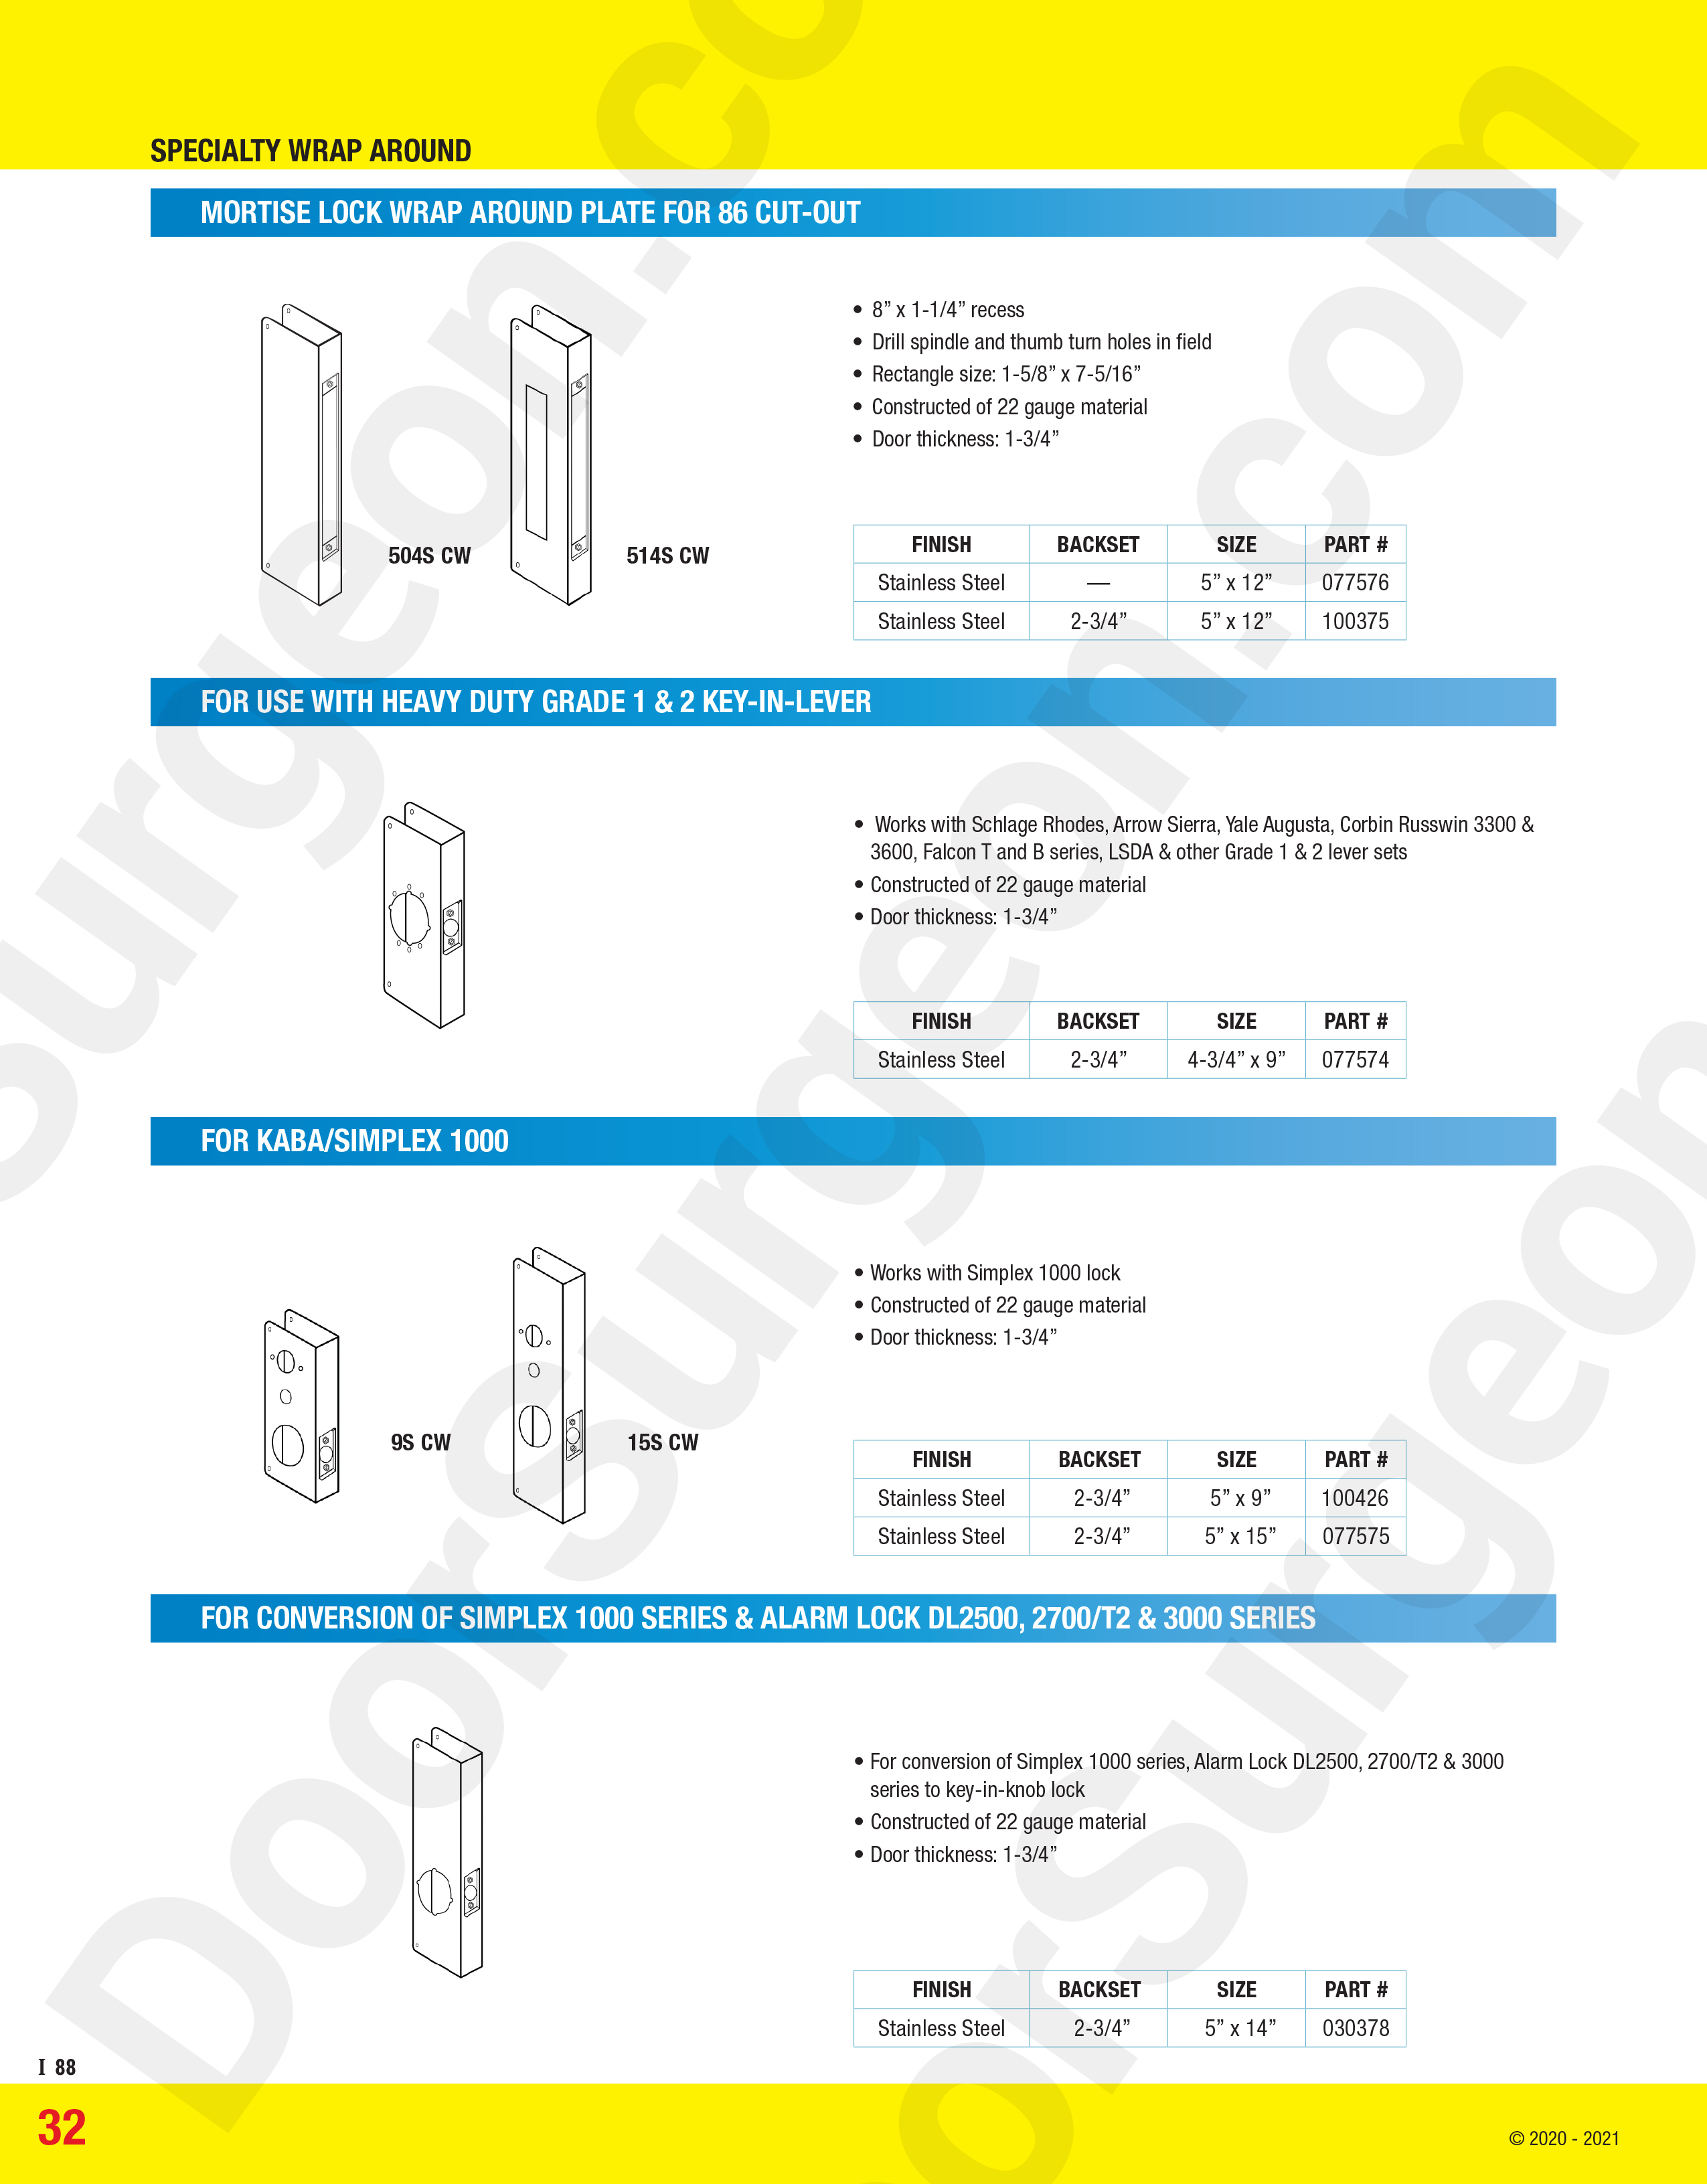 Mortise lock wrap around plates Simplex 1000 conversion and alarm lock DL2500, 2700/T2 & 3000 series